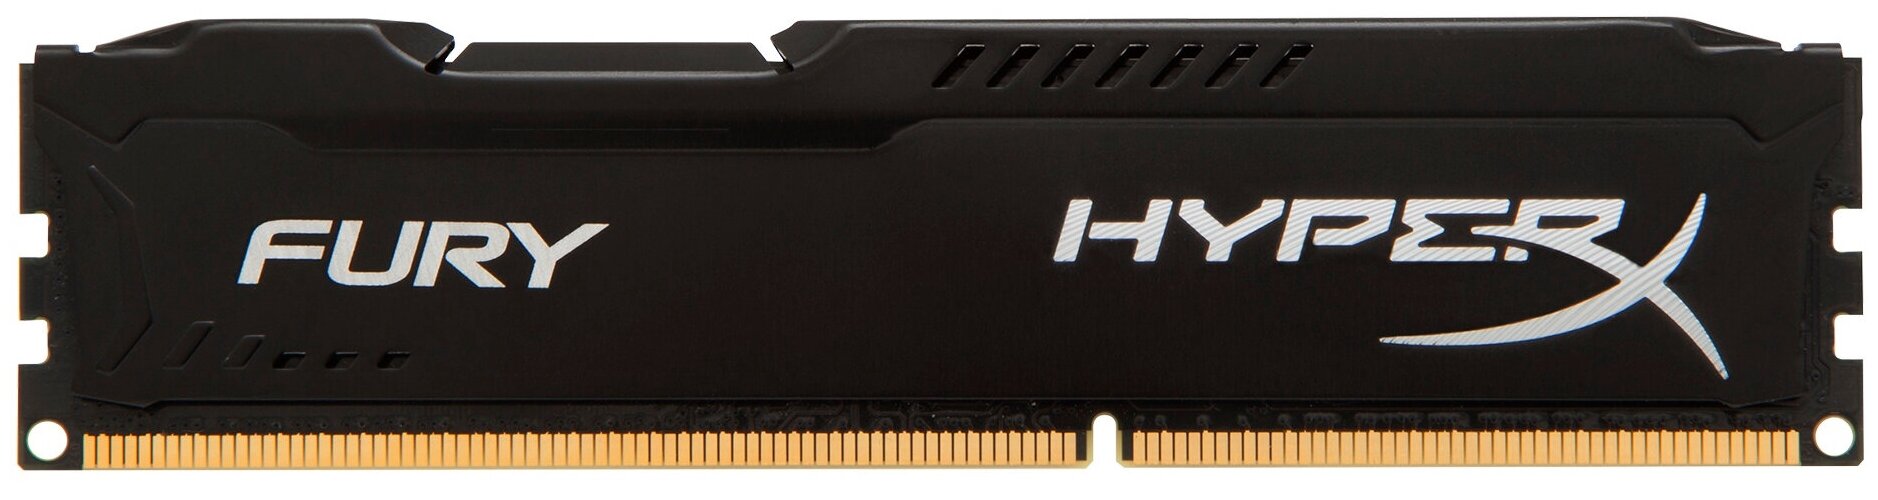 Оперативная память HyperX Fury 8 ГБ DDR3 1333 МГц DIMM CL9 HX313C9FB/8